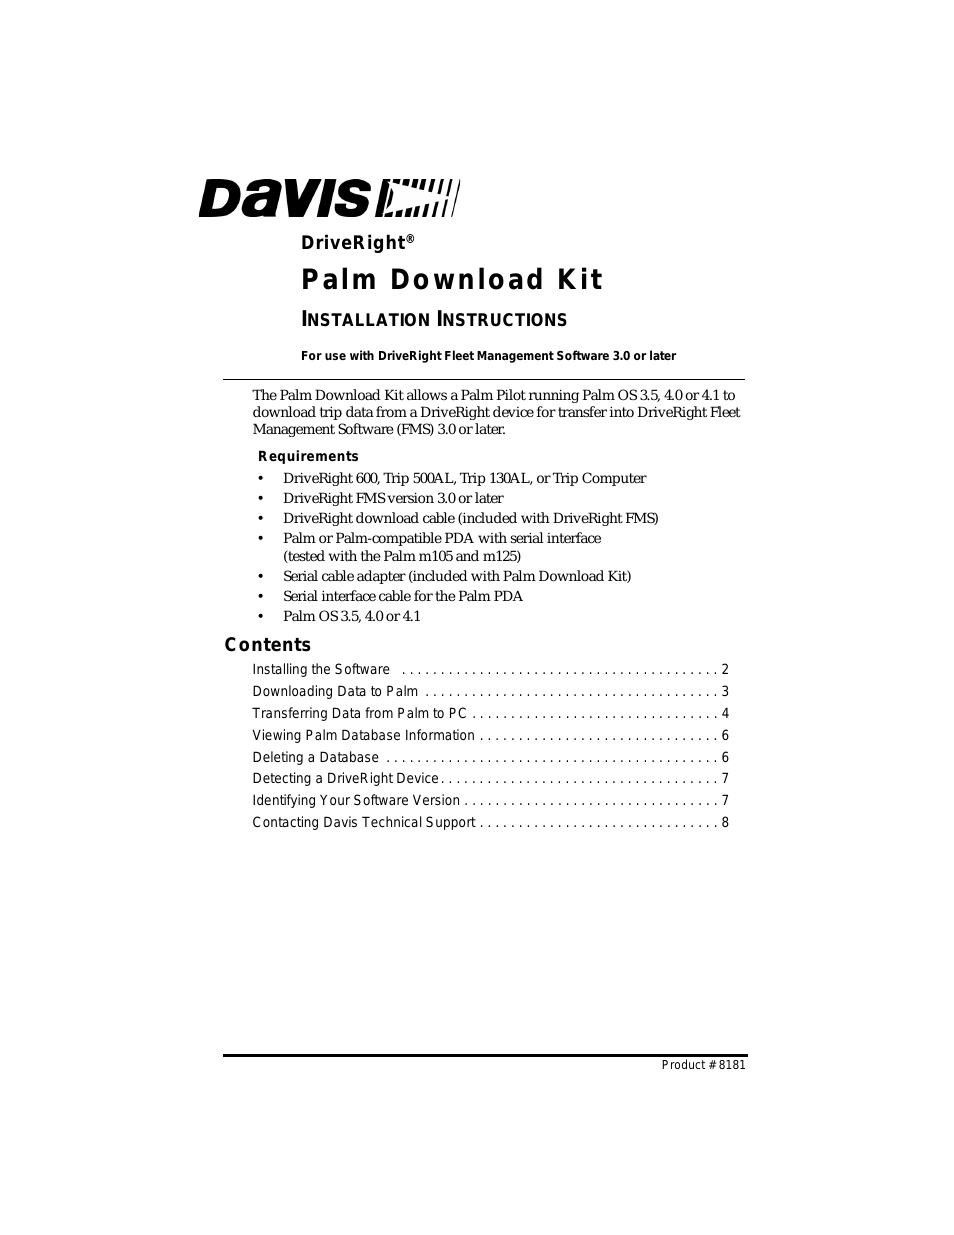 DriveRight Palm Download Kit Manual (8181)